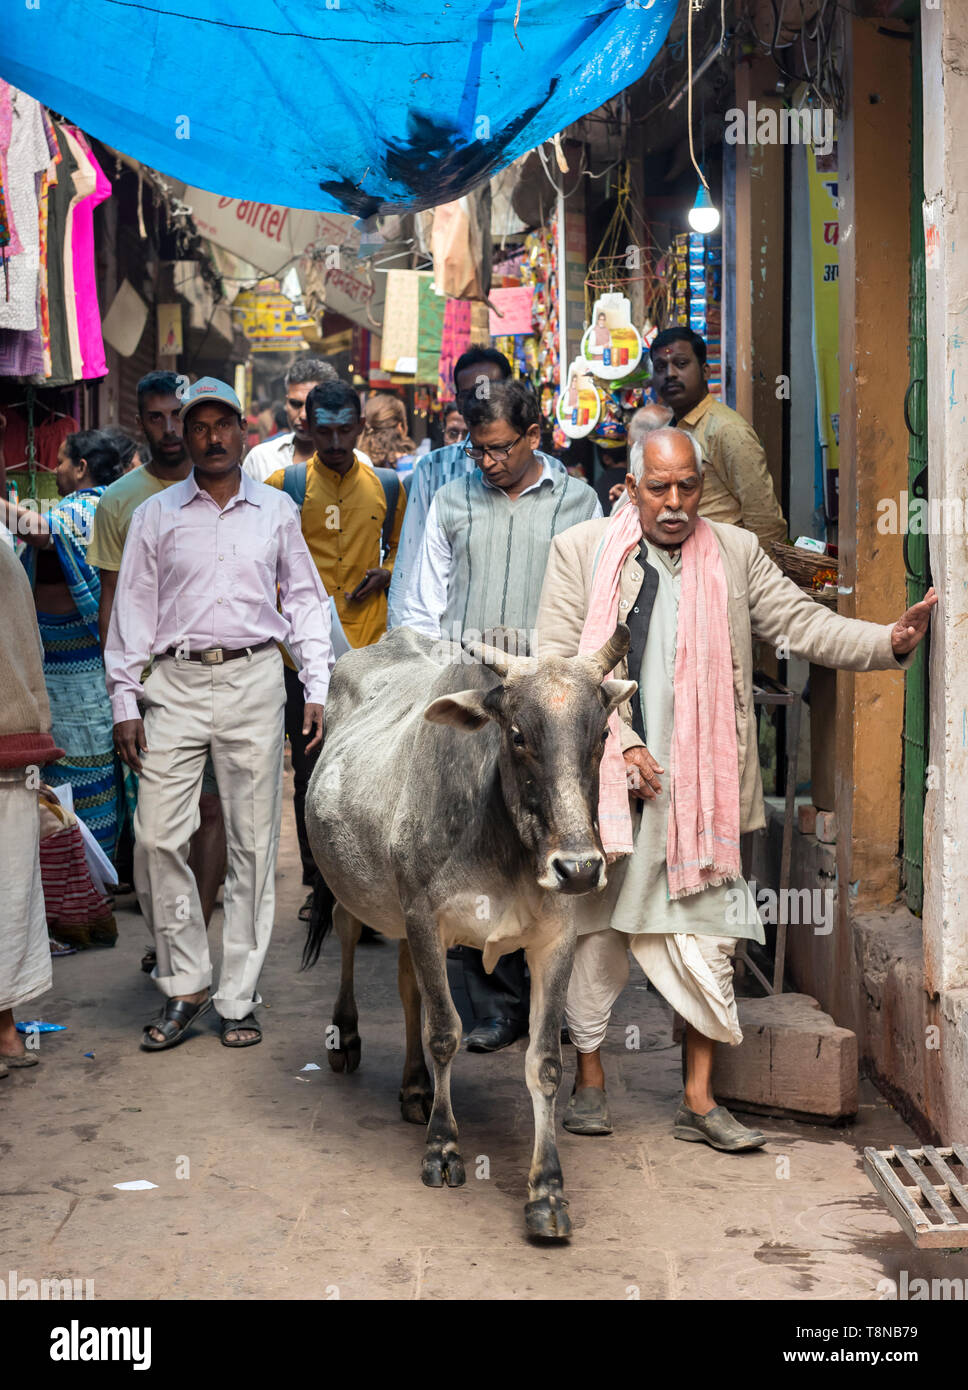 Cow and people walk narrow streets of Old City of Varanasi, India Stock Photo